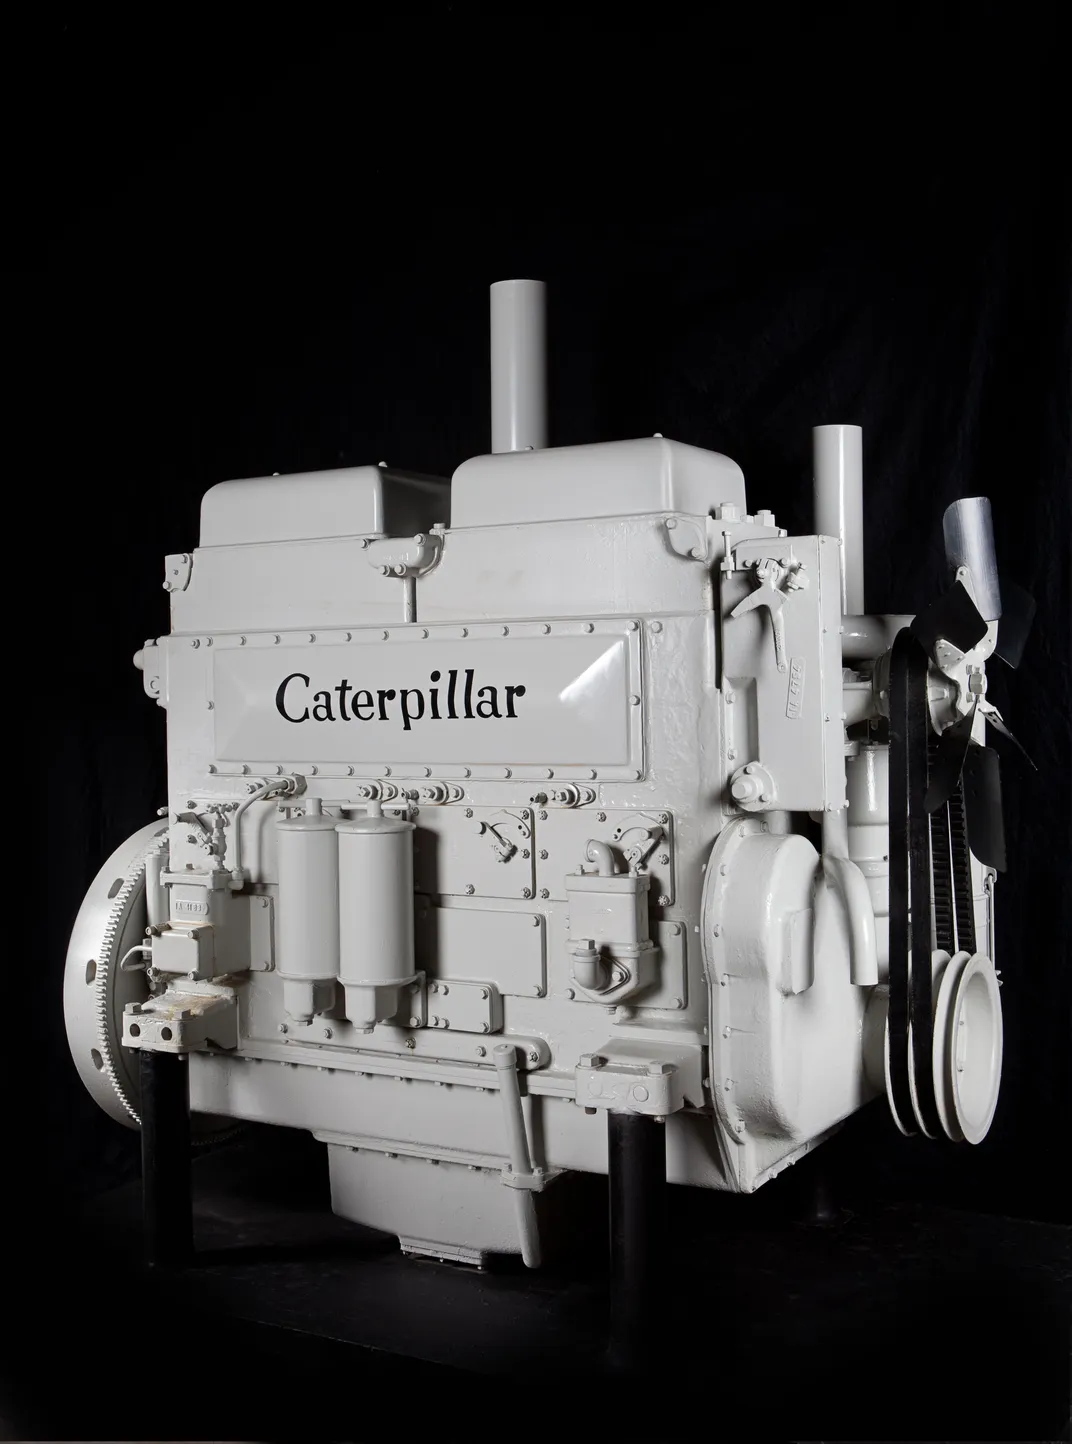 Caterpillar Diesel Engine "Old Betsy"